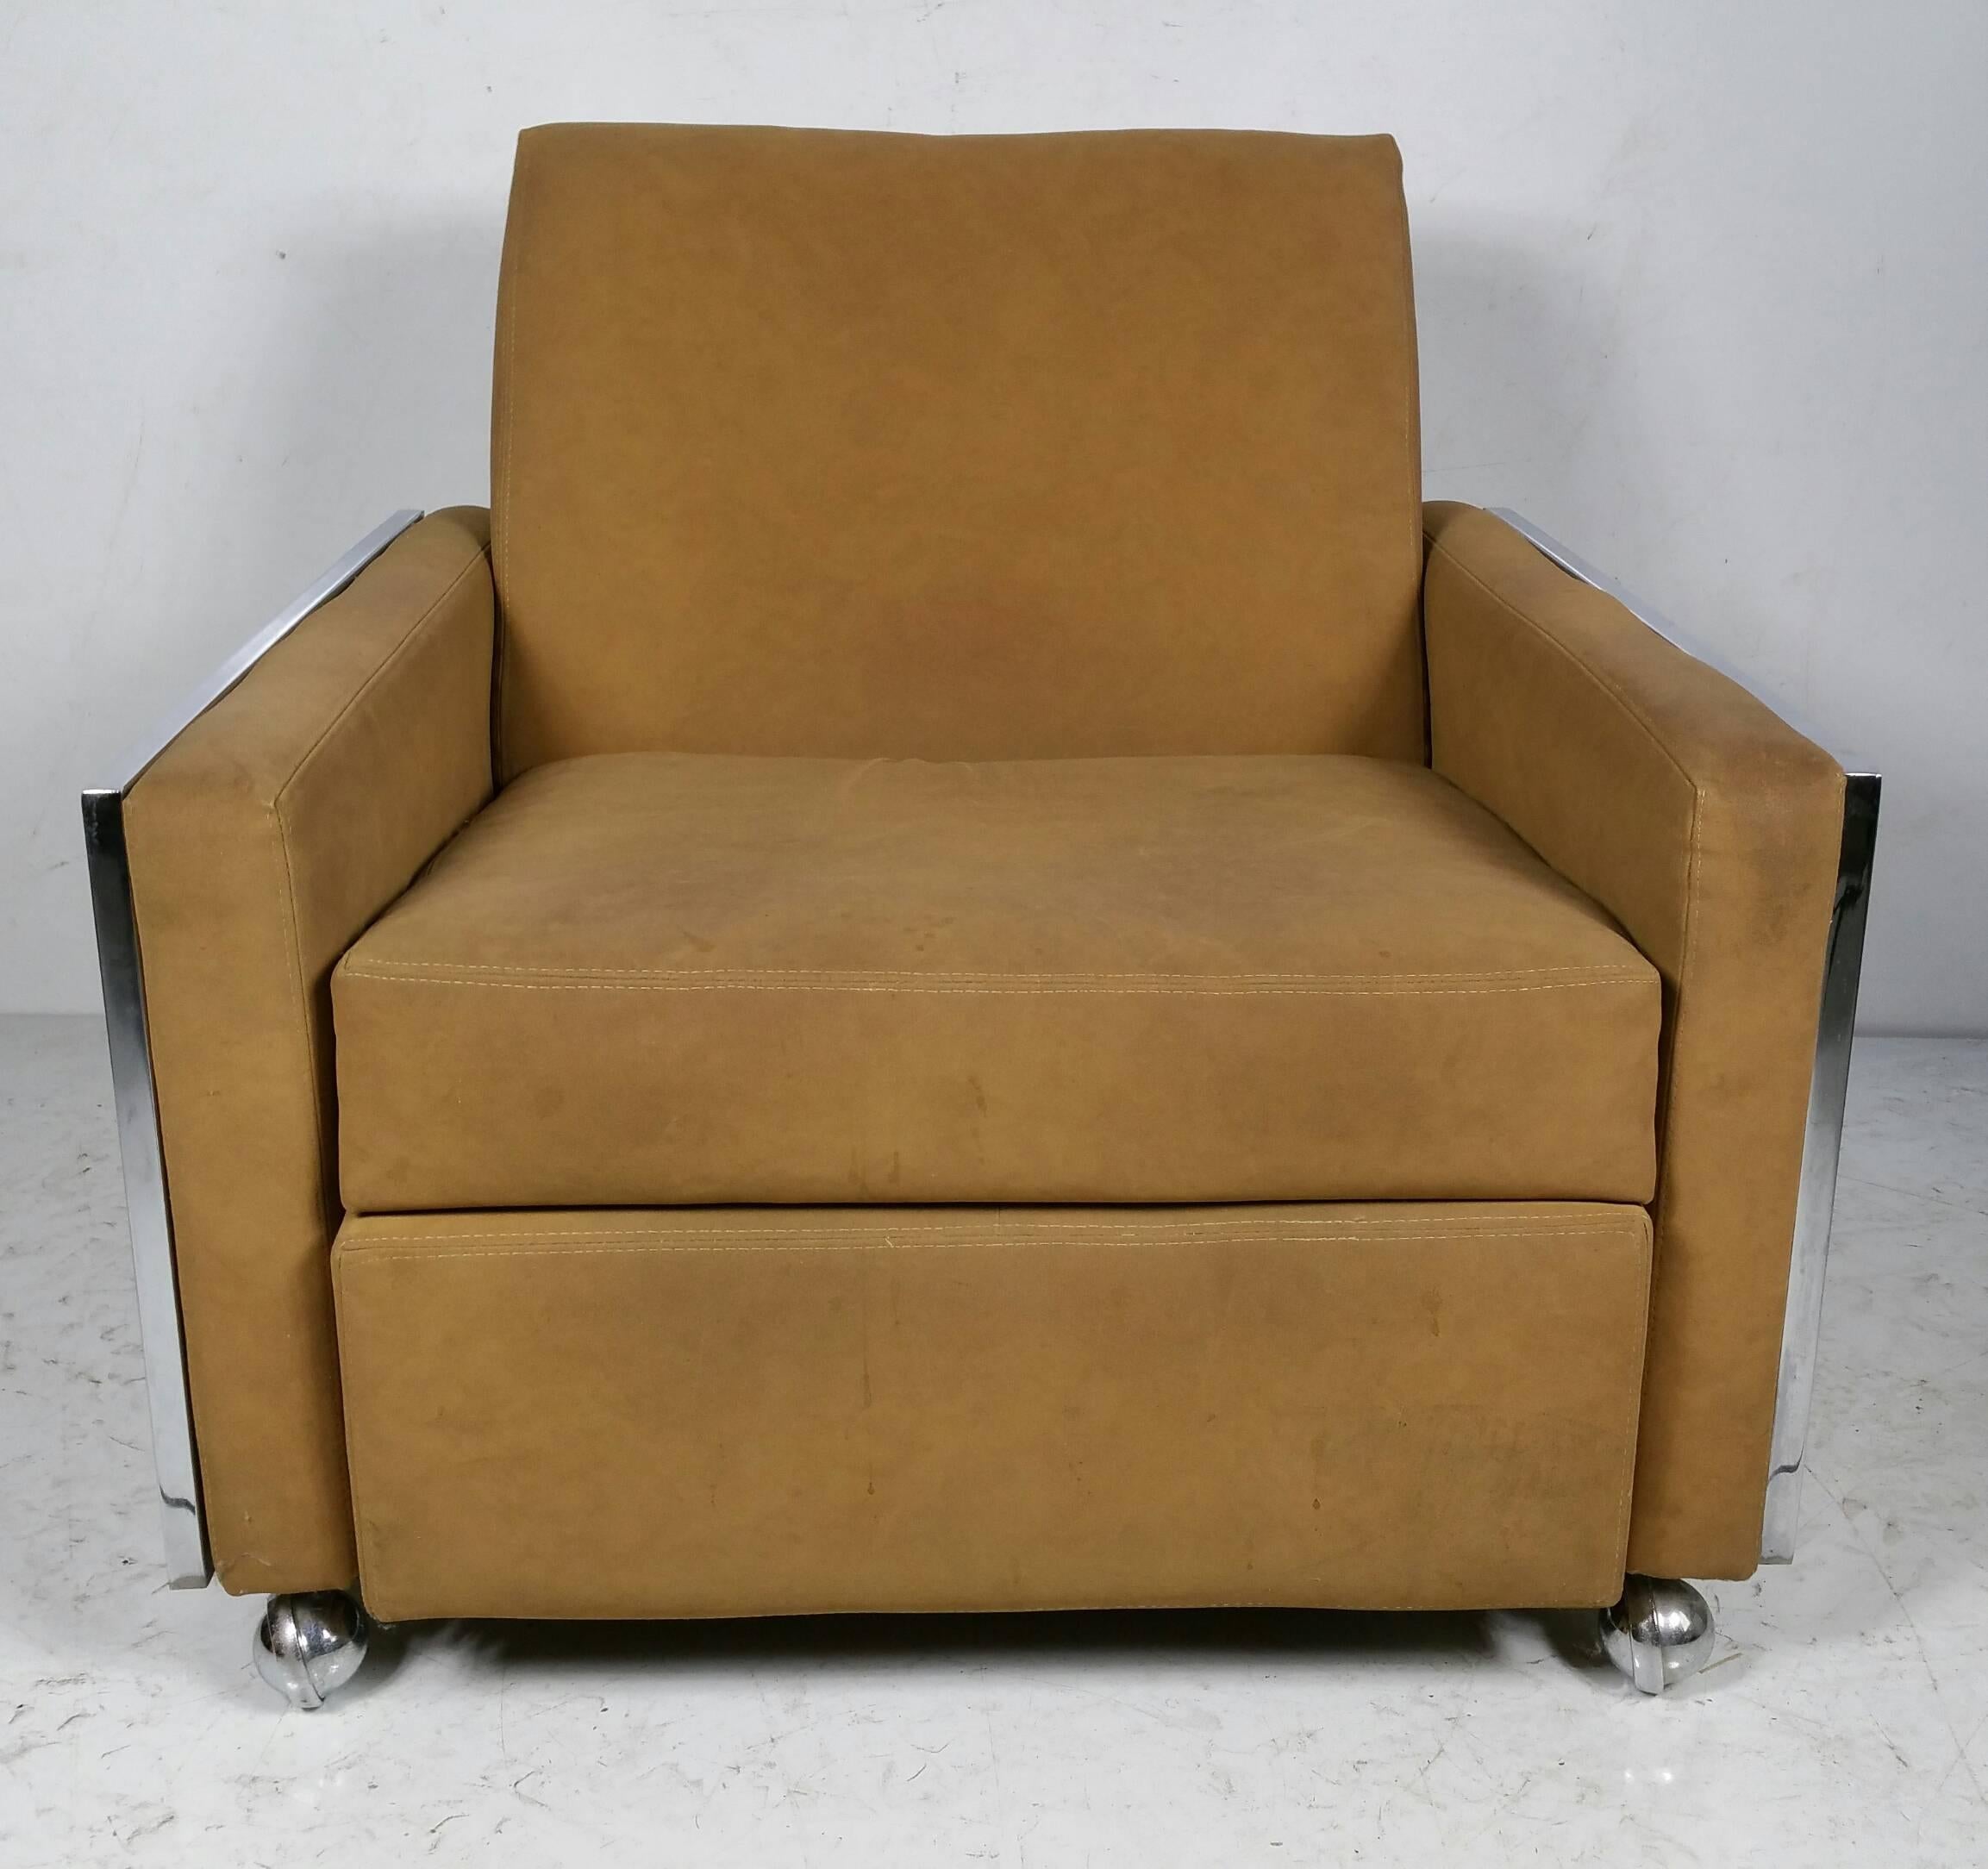 Cane Modernist Three Position Reclining Chair by Milo Baughman